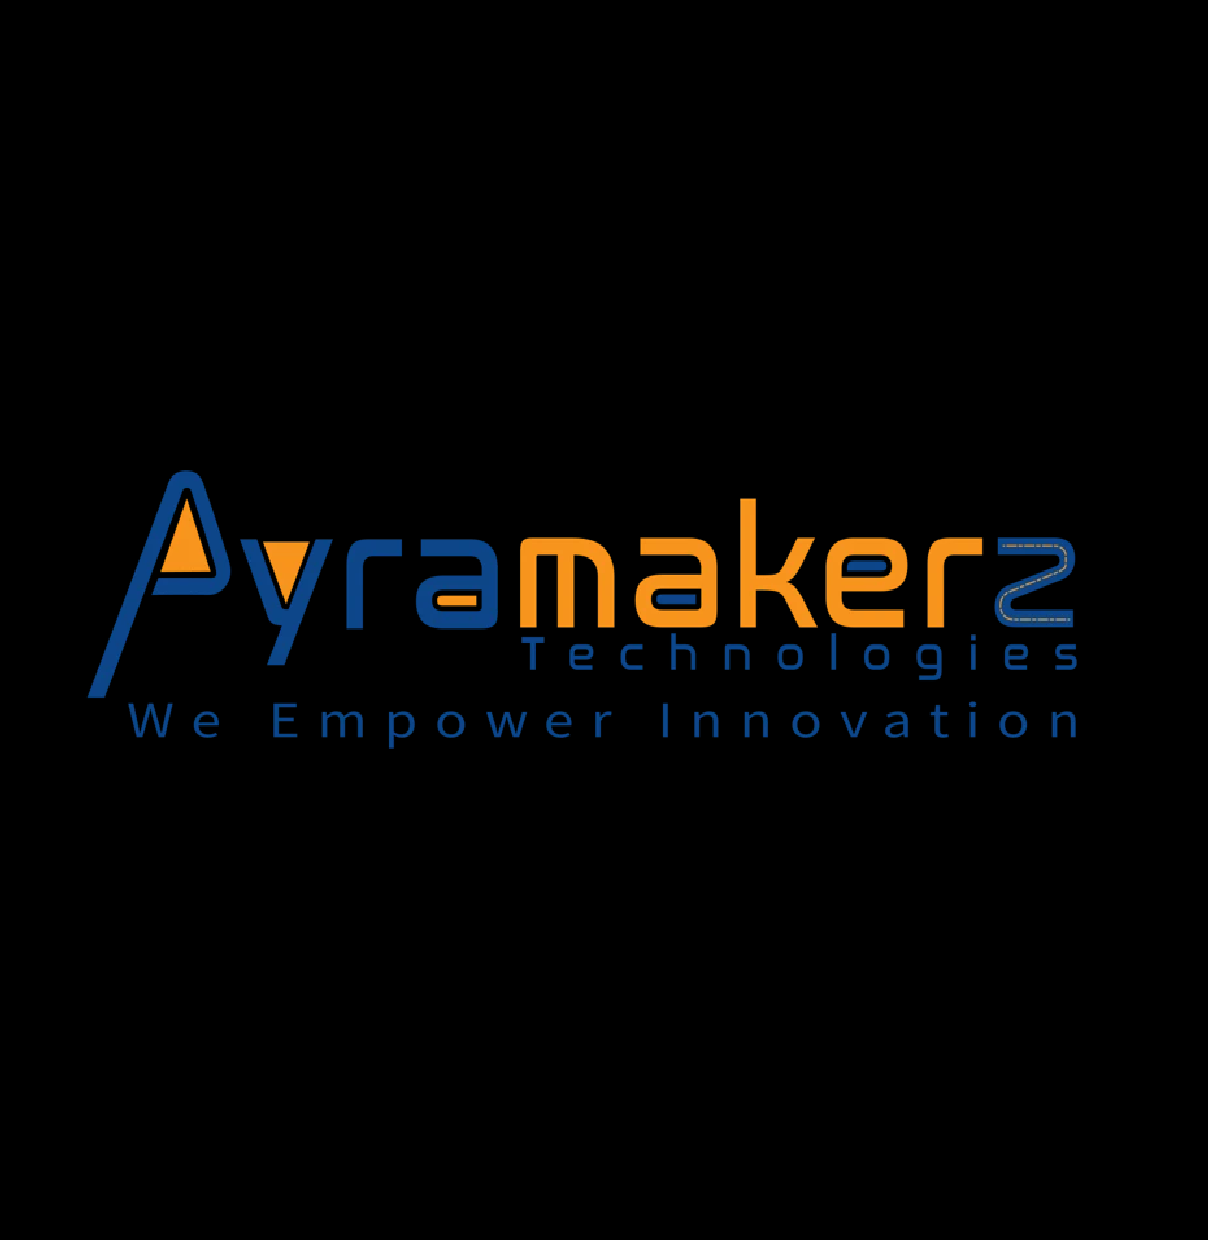 Pyramakerz Technologies